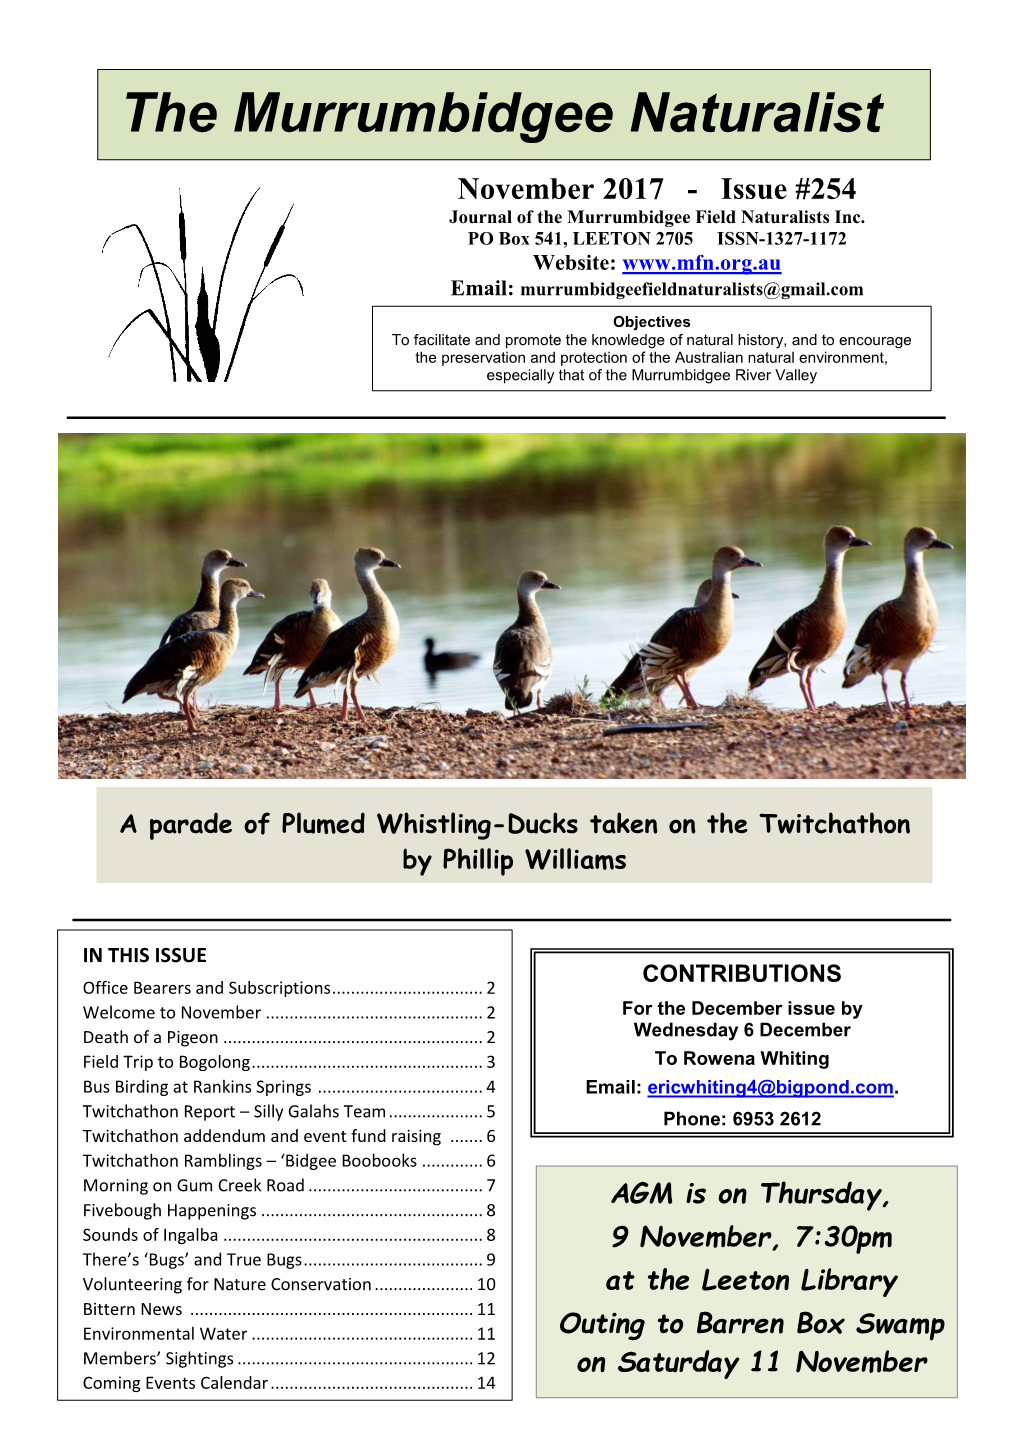 November 2017 - Issue #254 Journal of the Murrumbidgee Field Naturalists Inc